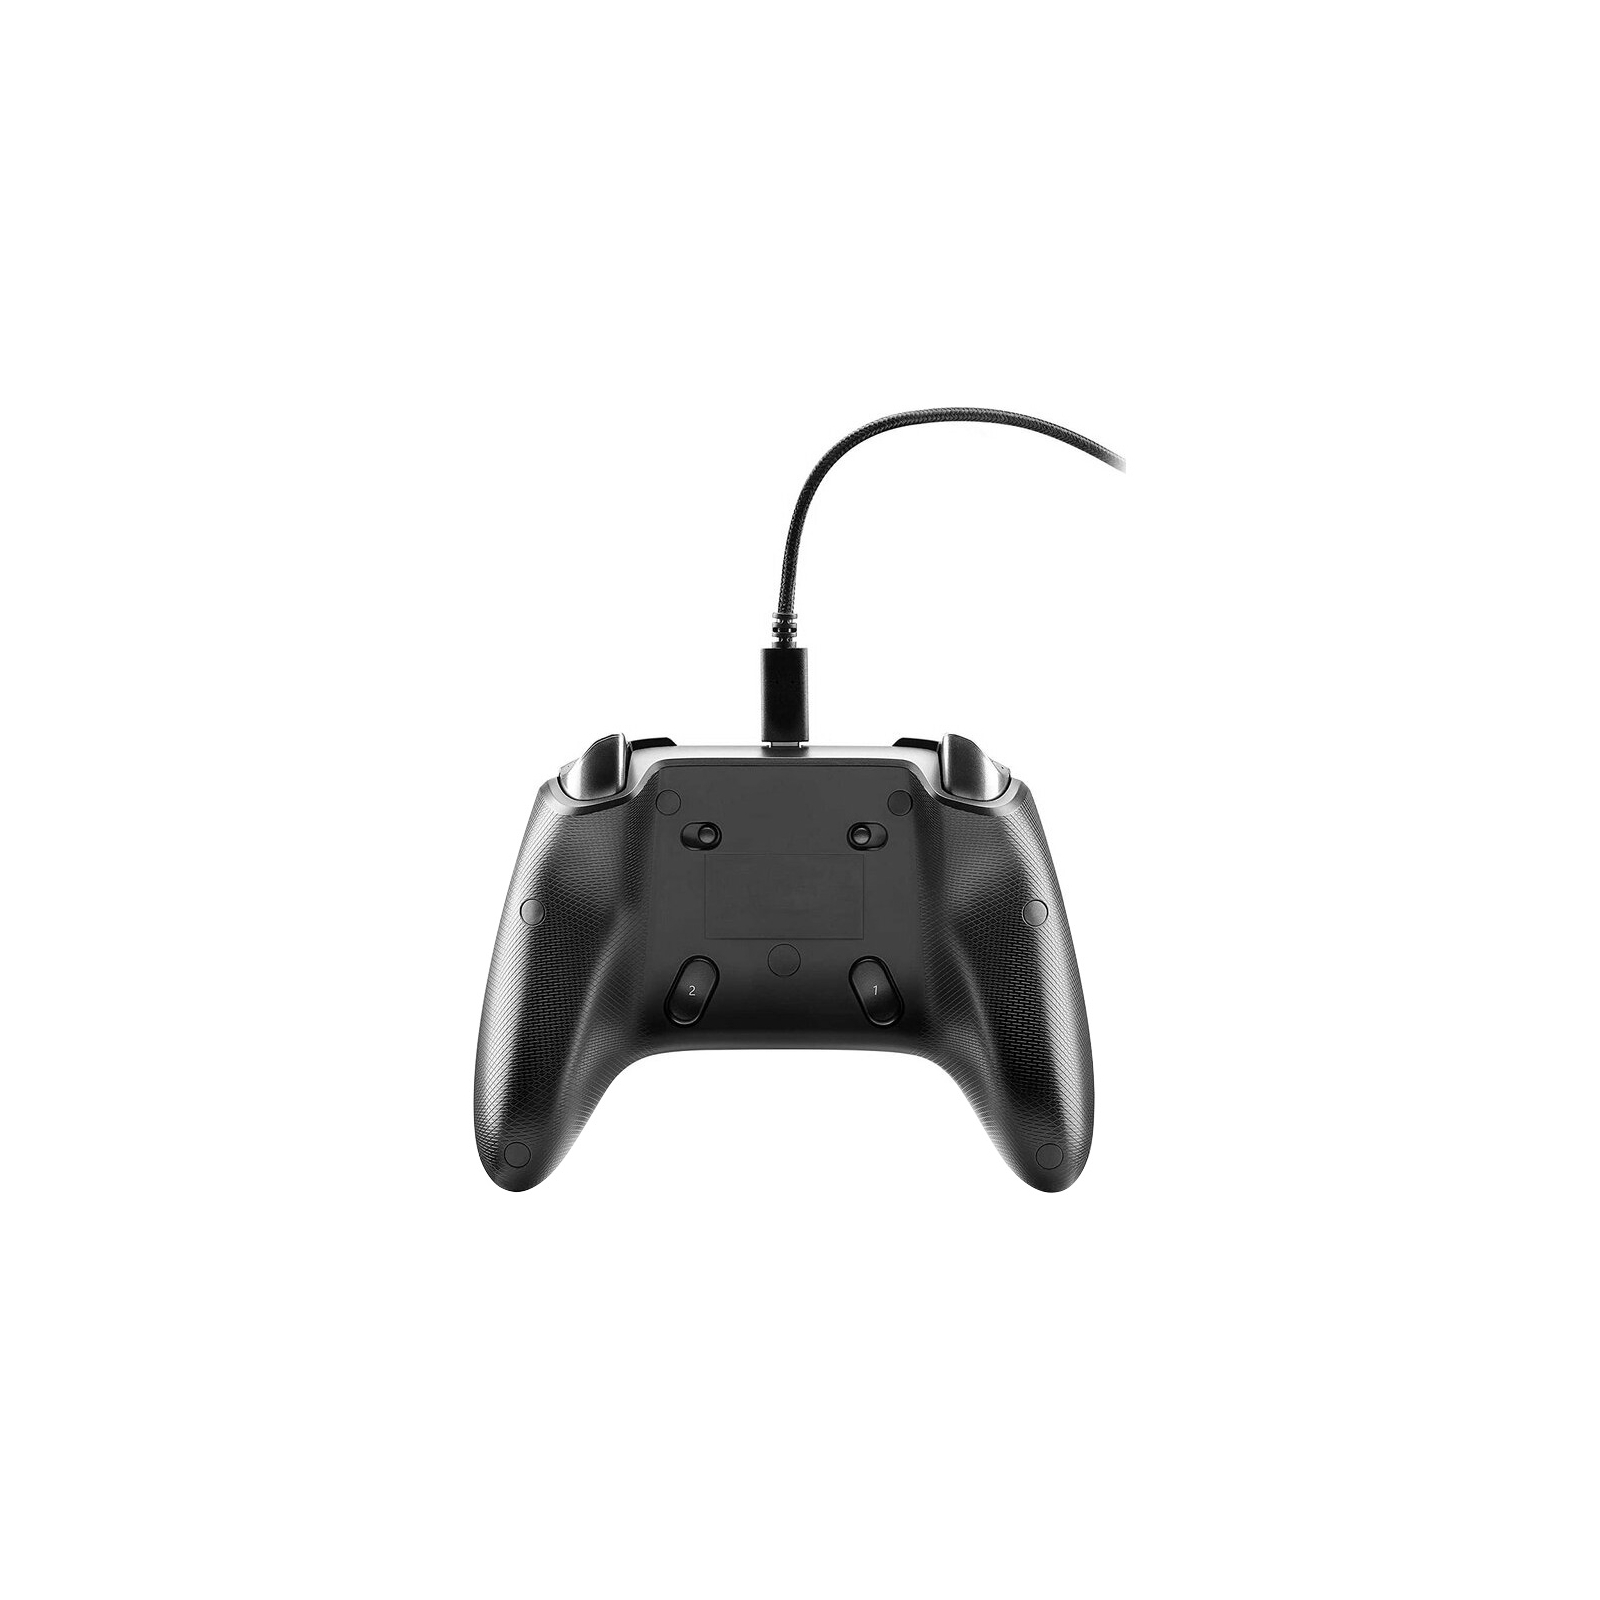 Геймпад ThrustMaster For PC/Xbox USB Eswap S Pro Controller Black (4460225) зображення 4